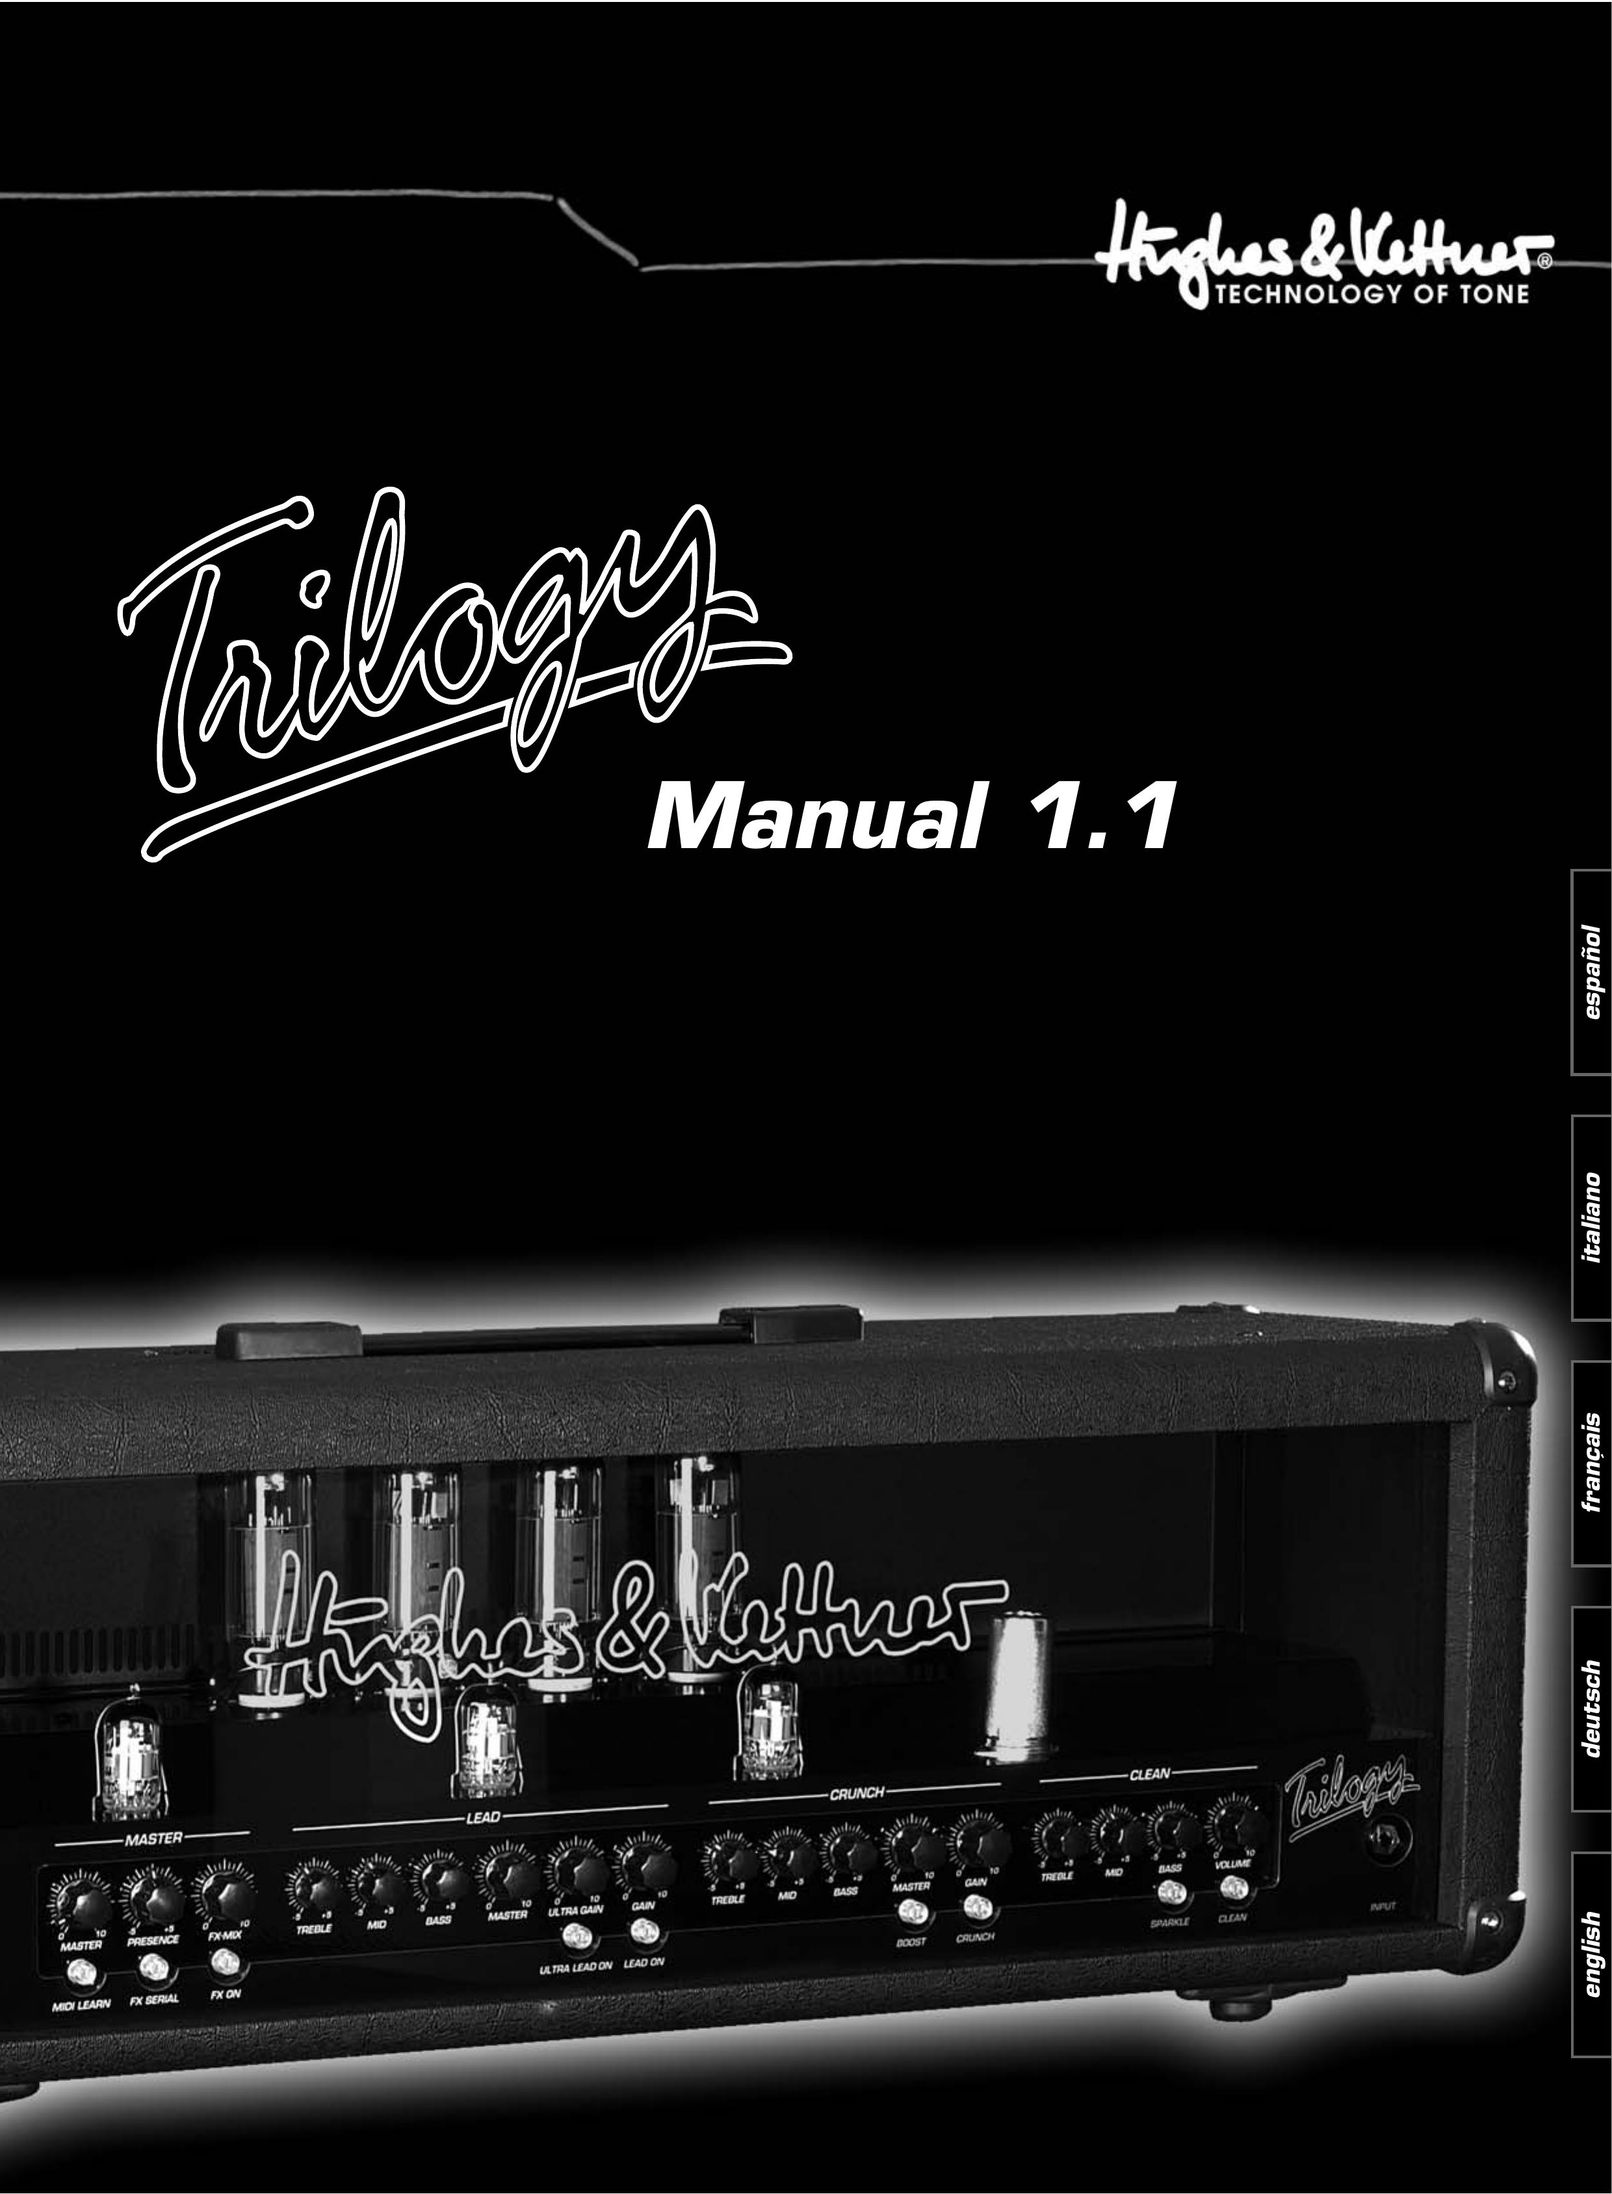 Hughes & Kettner TrilogyTM Stereo Amplifier User Manual